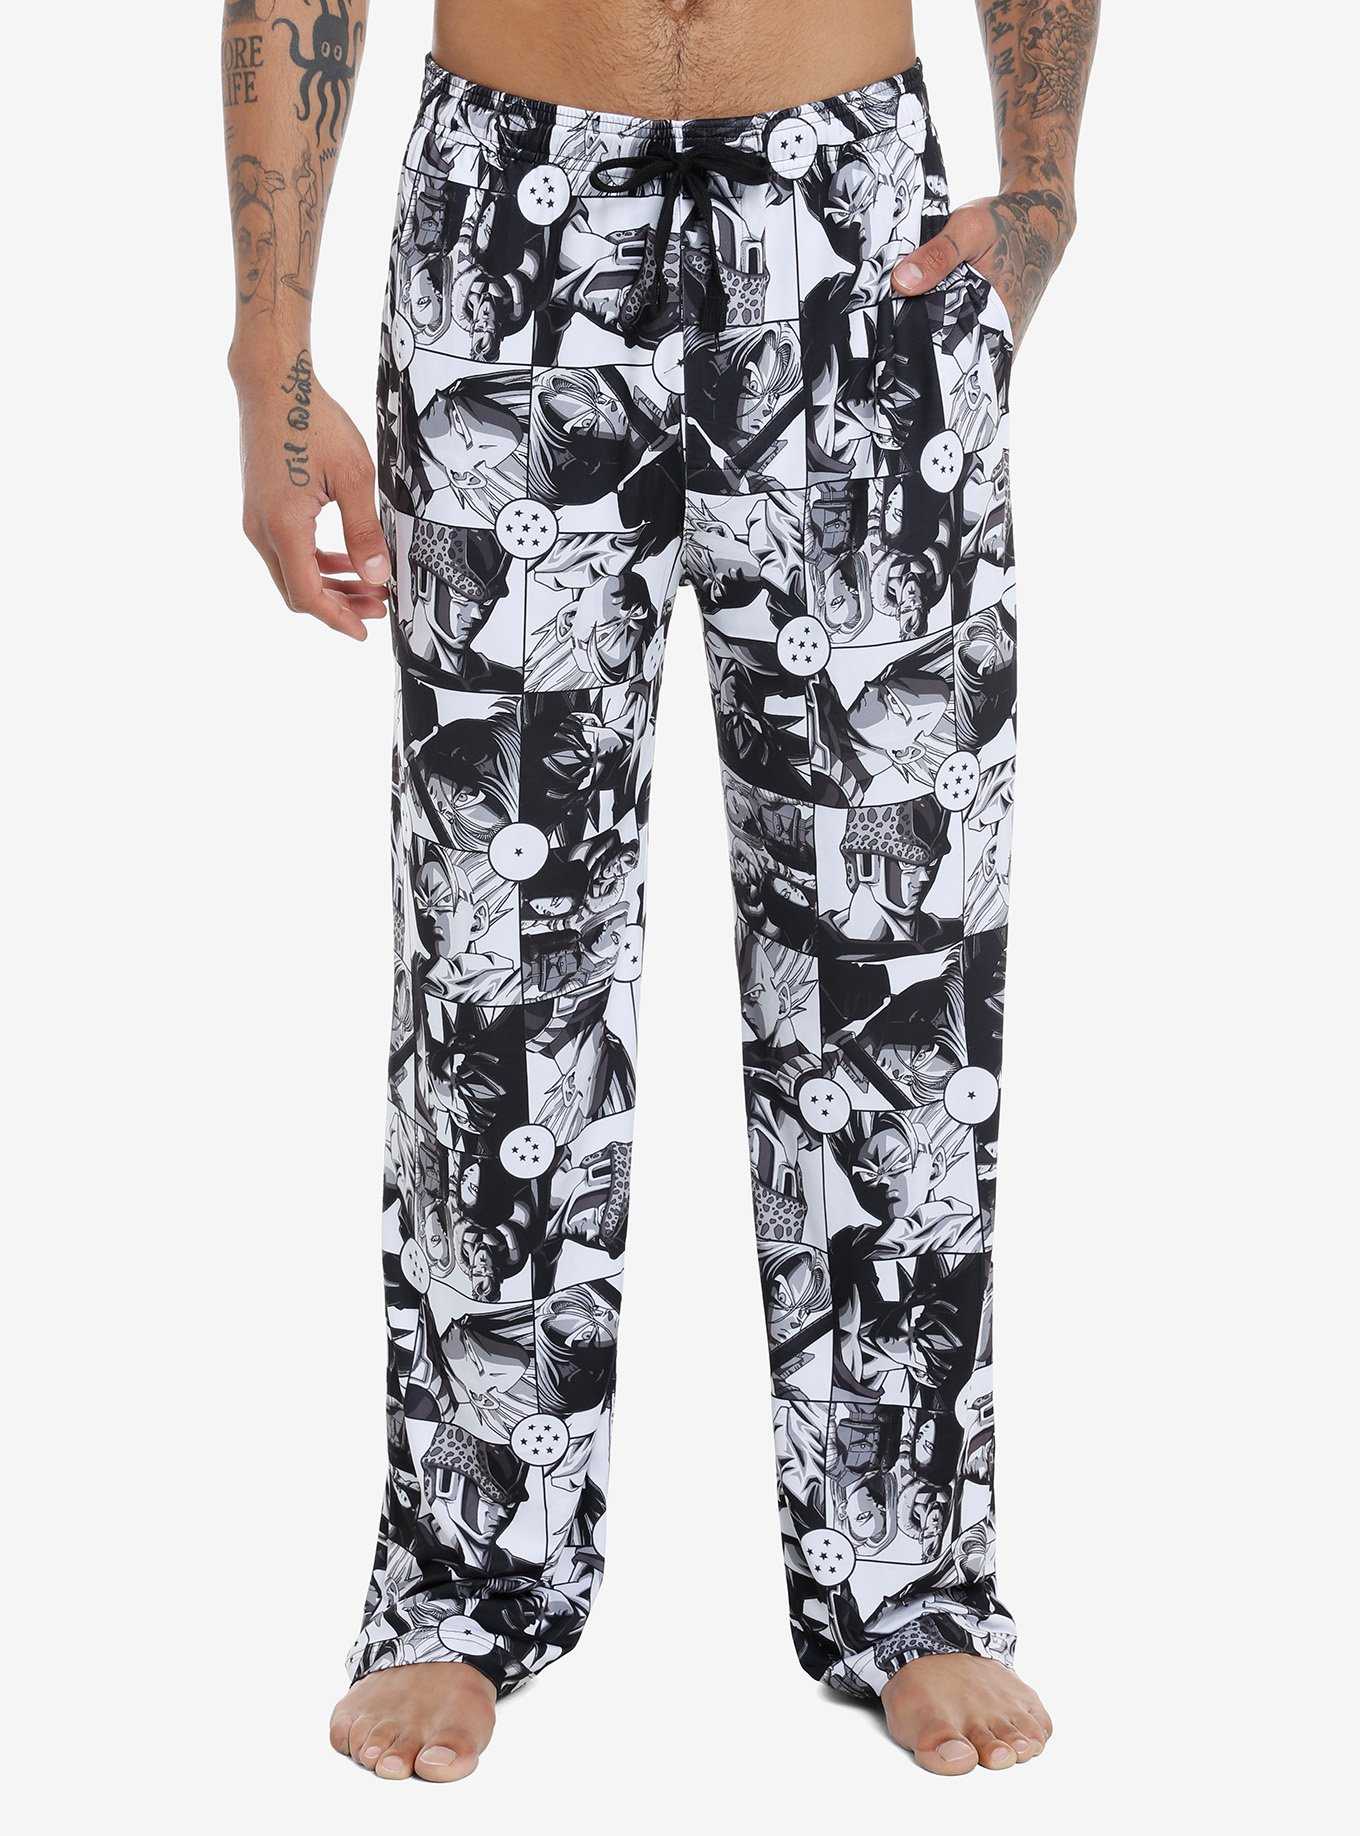 Ladies Chicken Print Pj Bottoms, Crazy Chicken Lady Pajama Pants, Summer Pjs,  Women's Novelty Pj Pants, Summer Sleepwear -  Canada